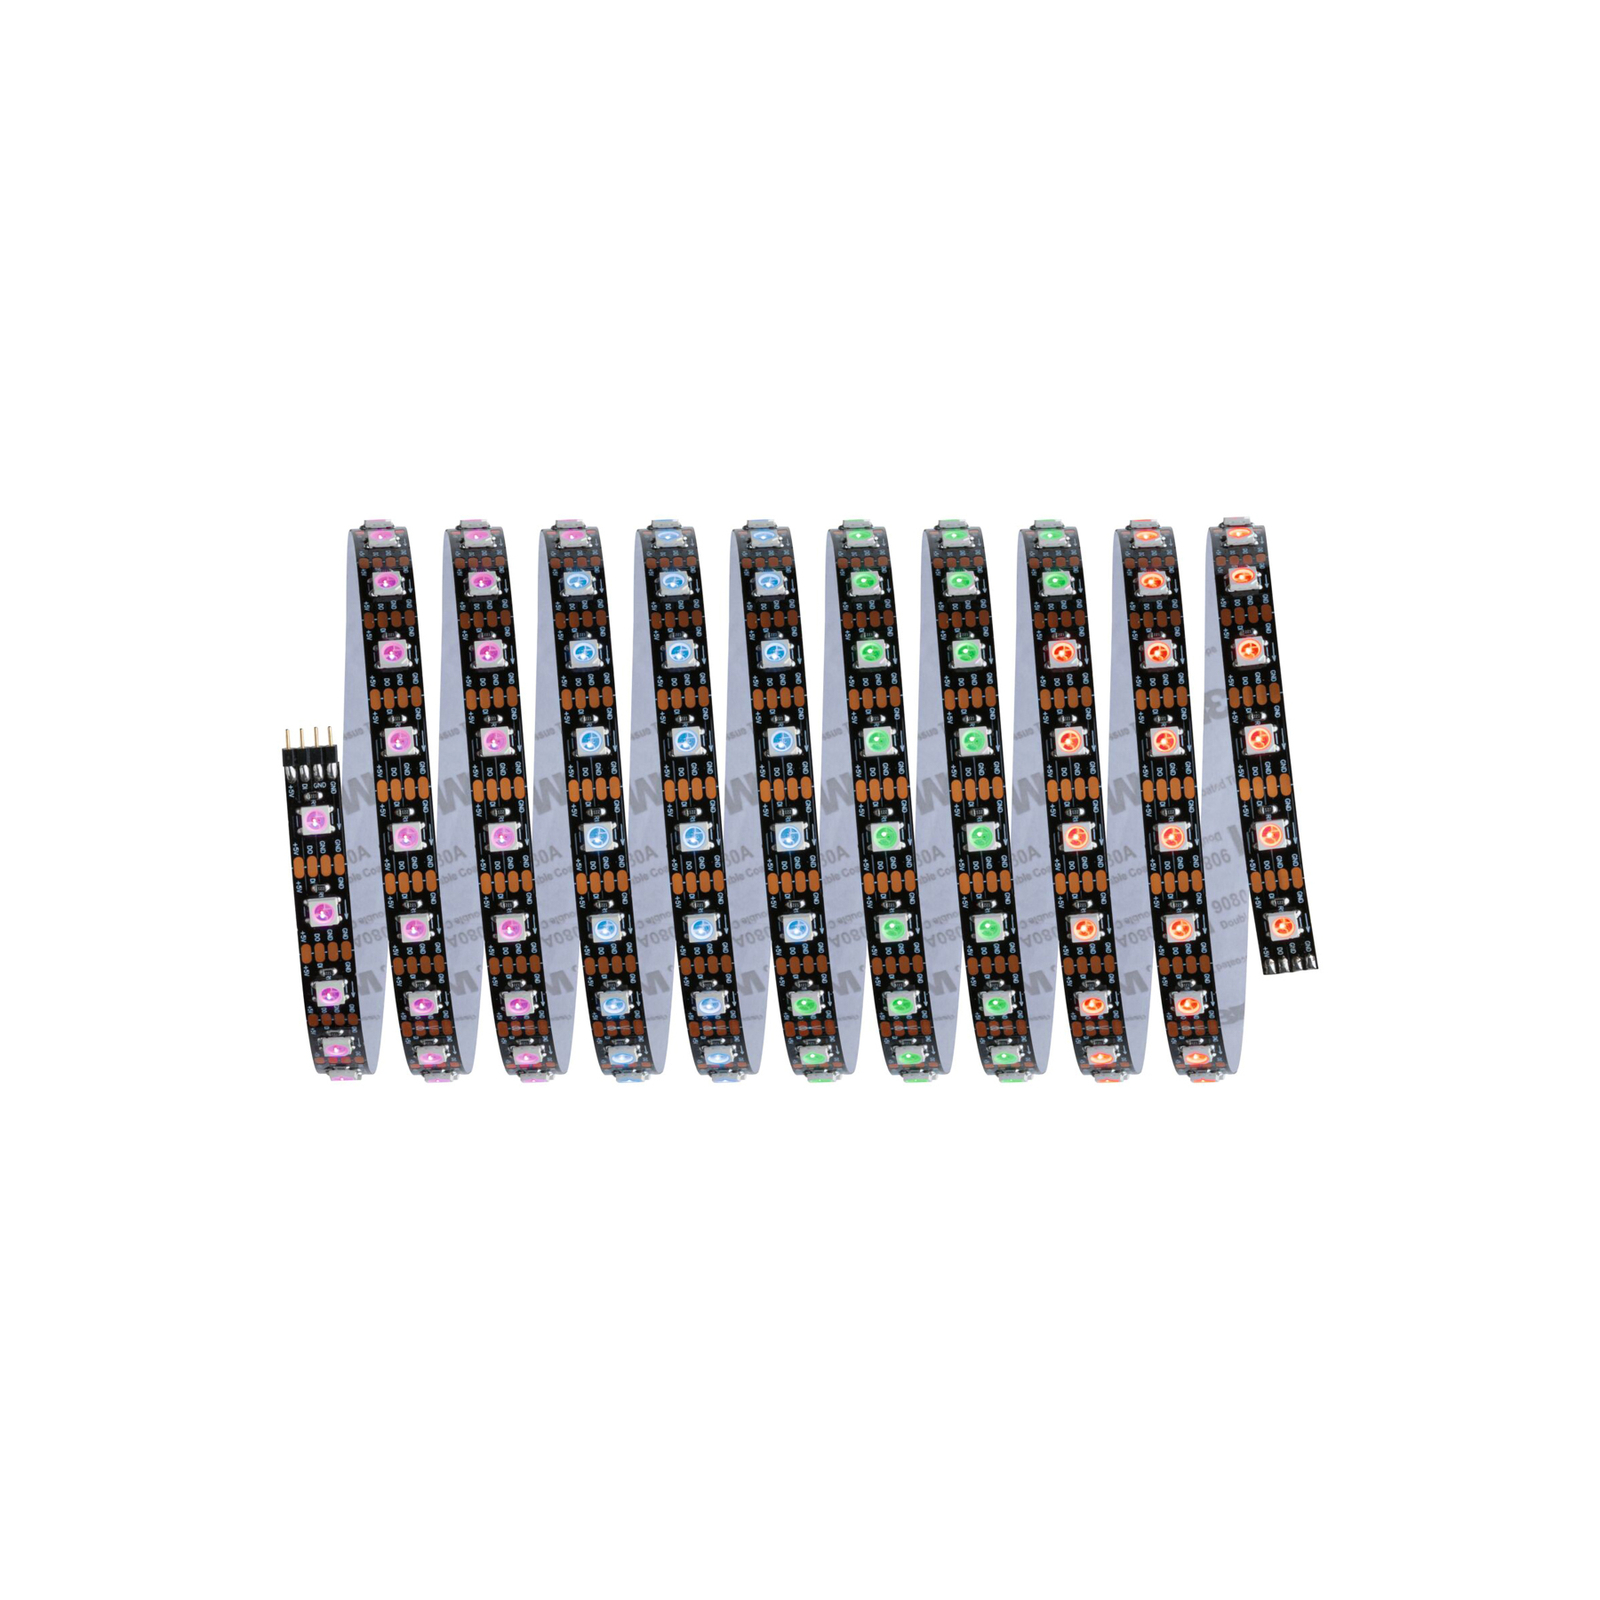 Paulmann EntertainLED LED-strip, RGB, sæt, 3m